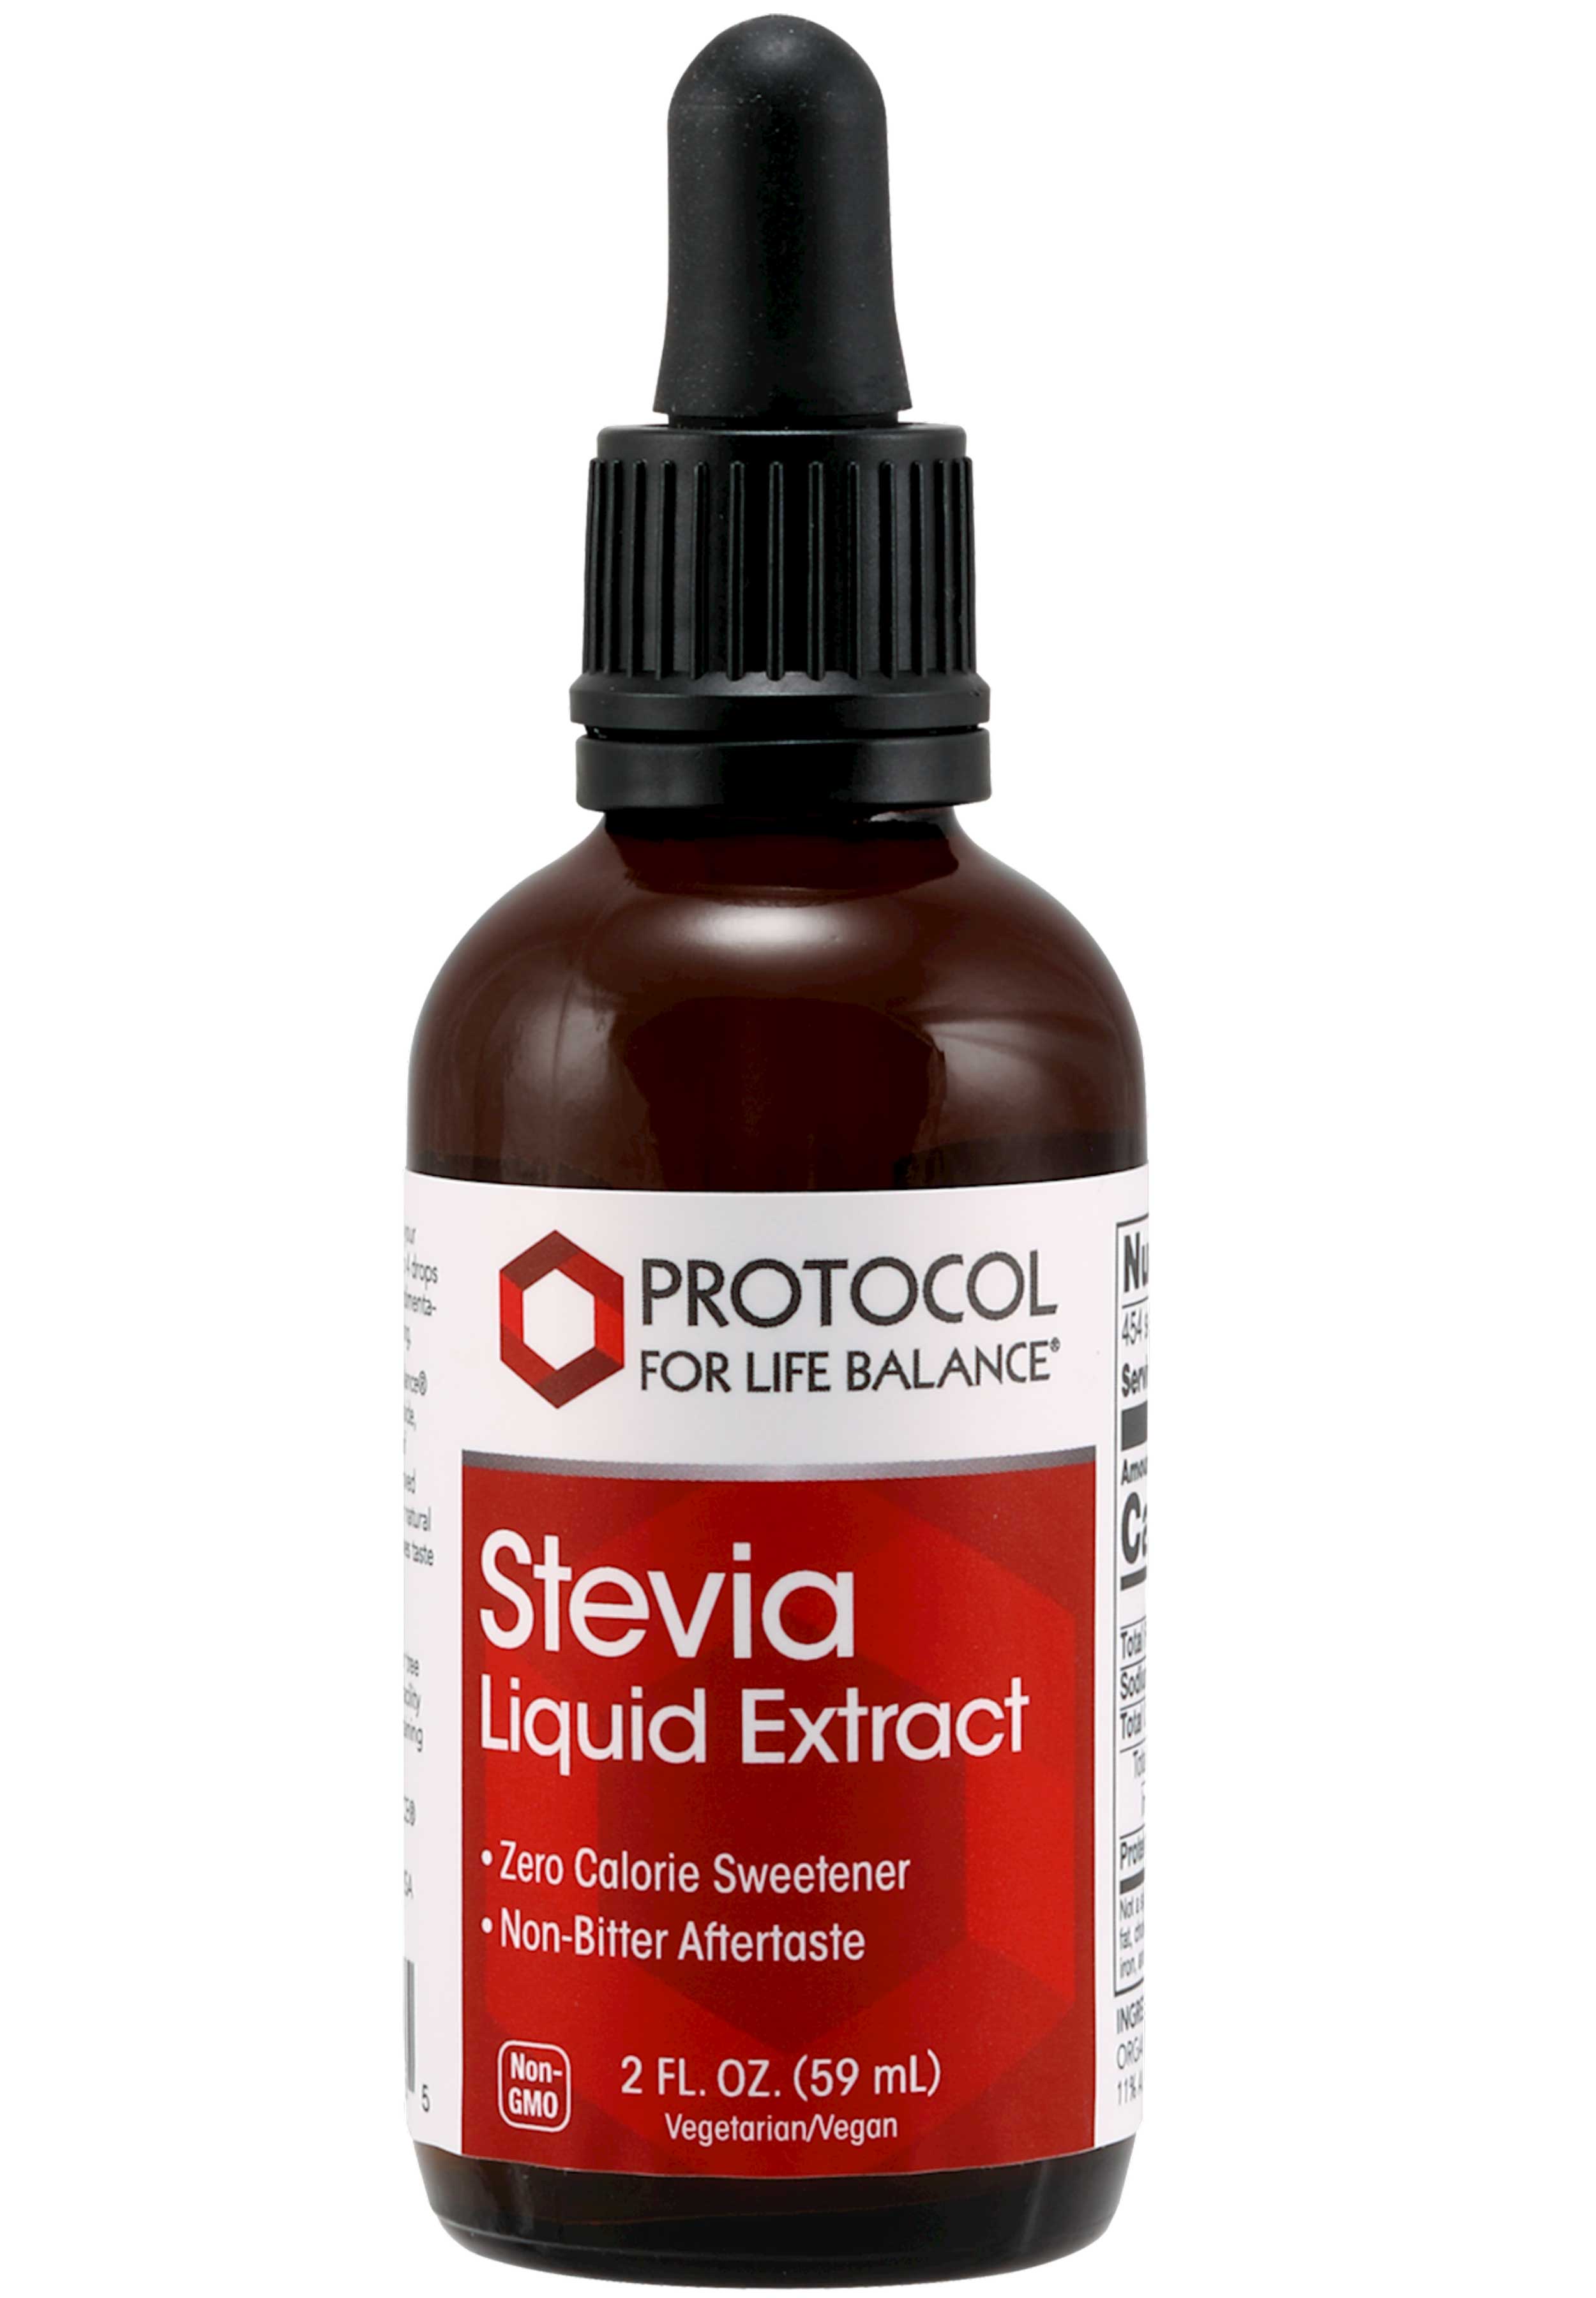 Protocol for Life Balance Stevia Liquid Extract